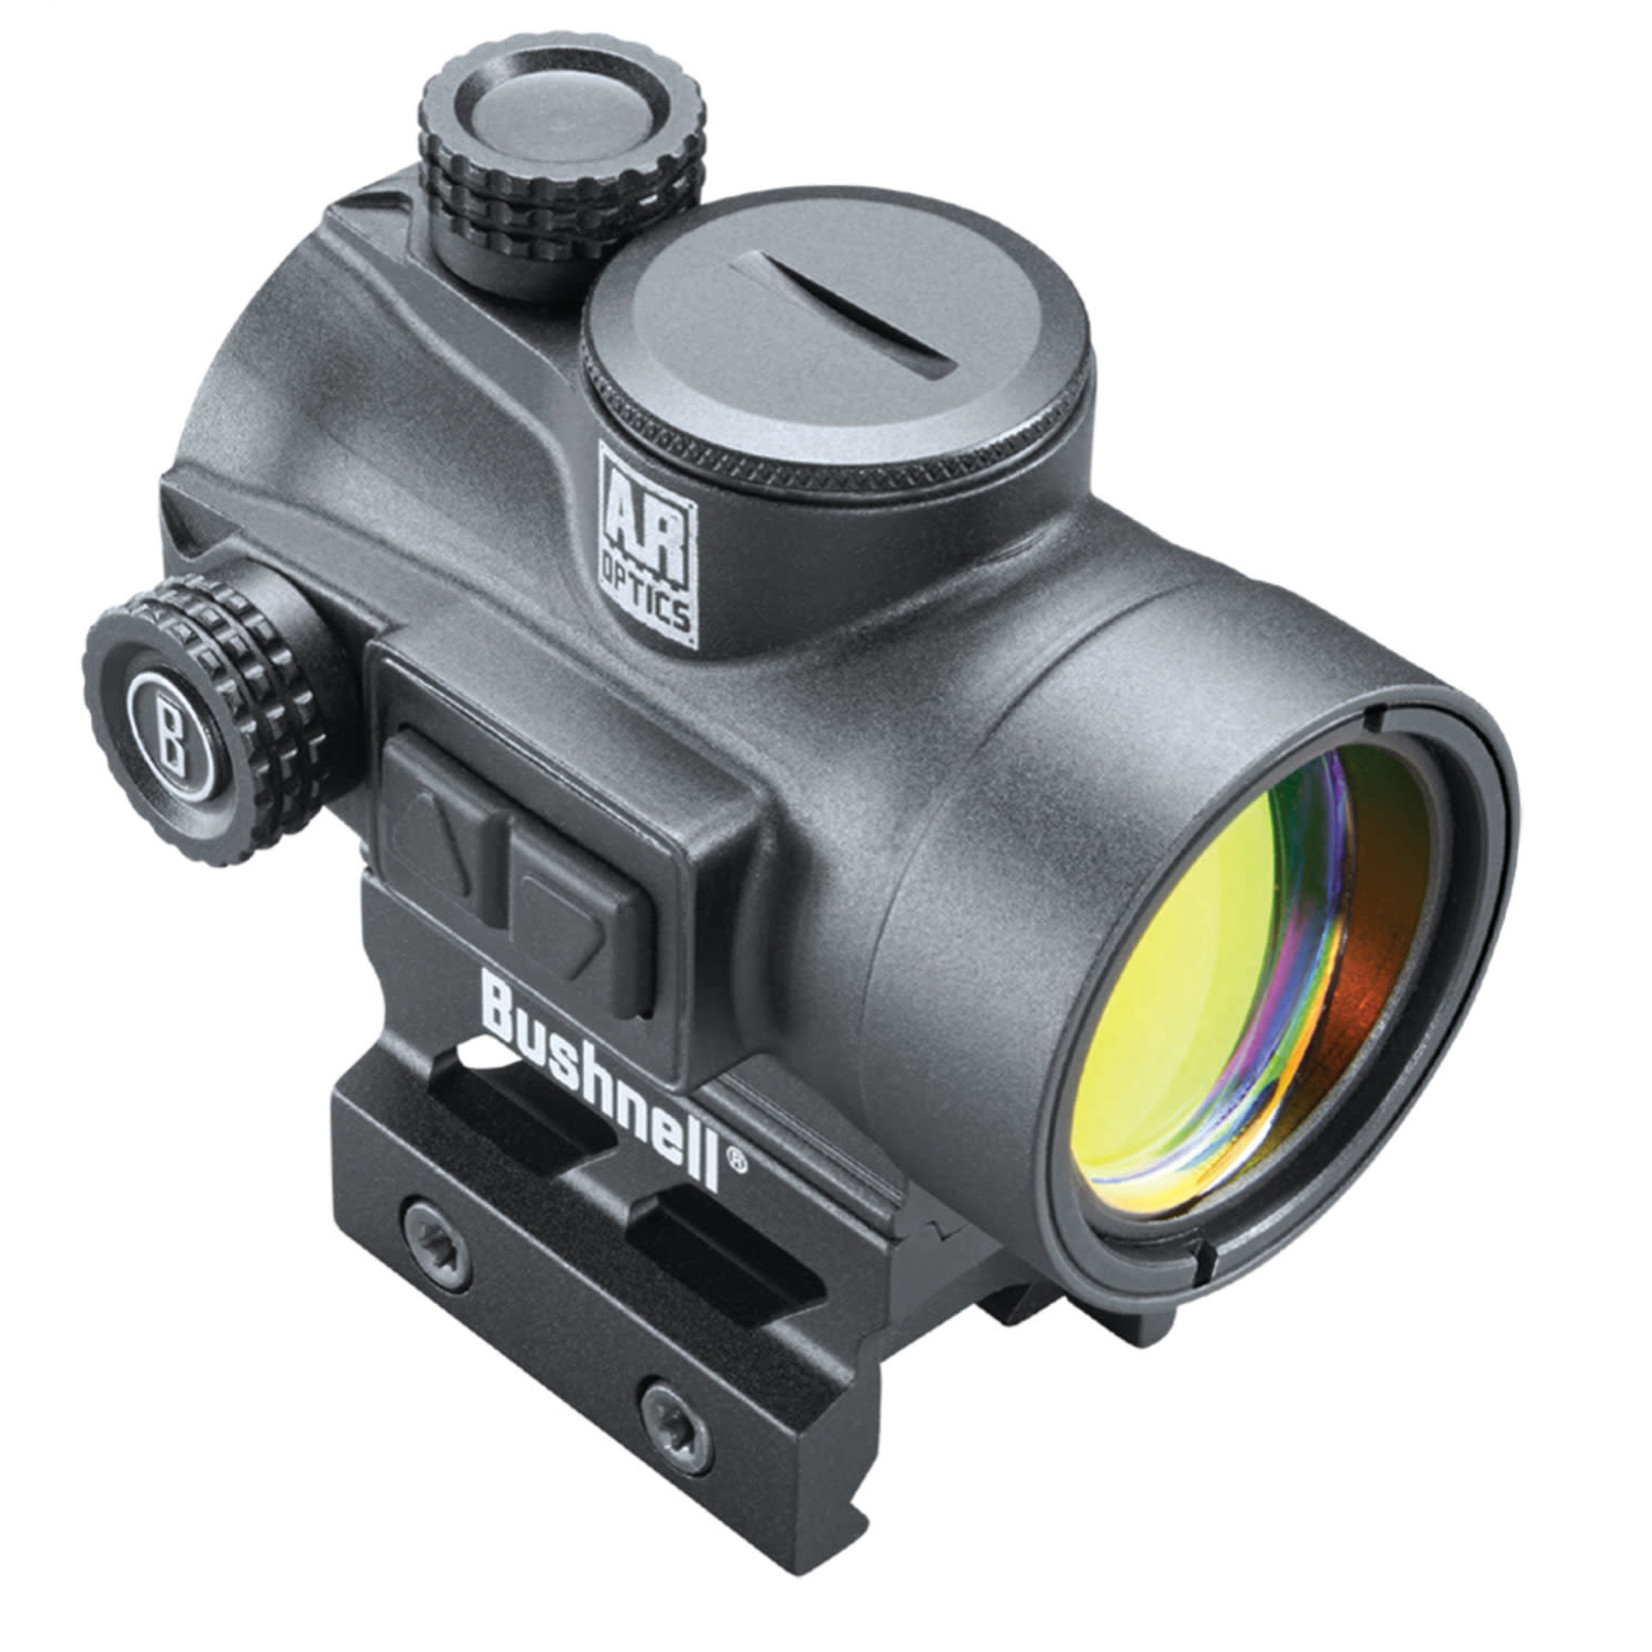 Bushnell (AR Optics) TRS-26 1x26mm Red Dot